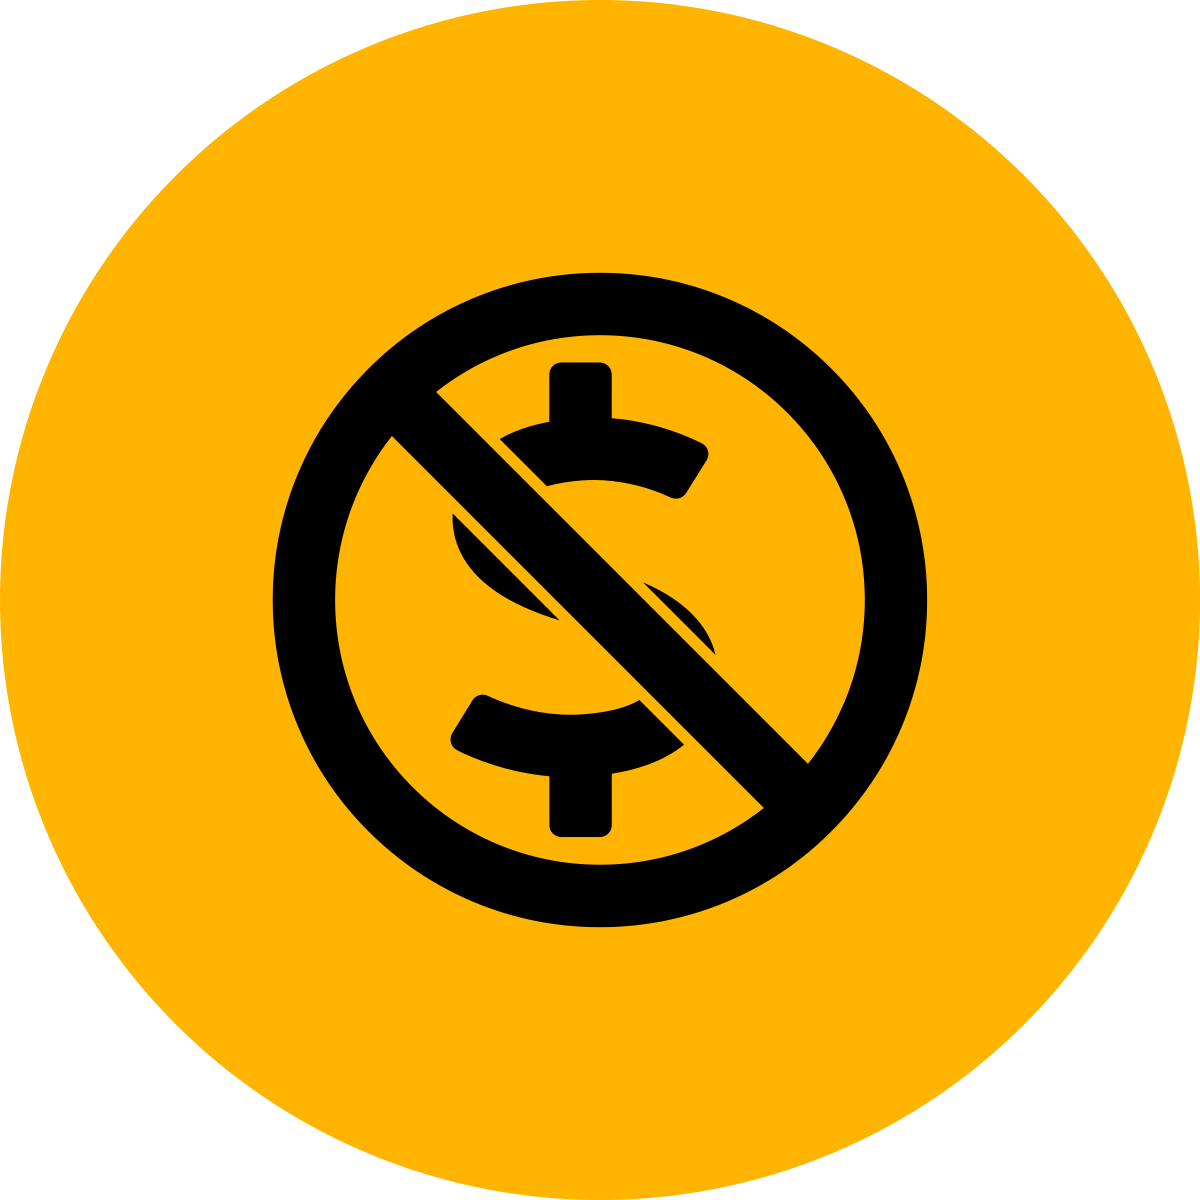 logo representing free/ no cost